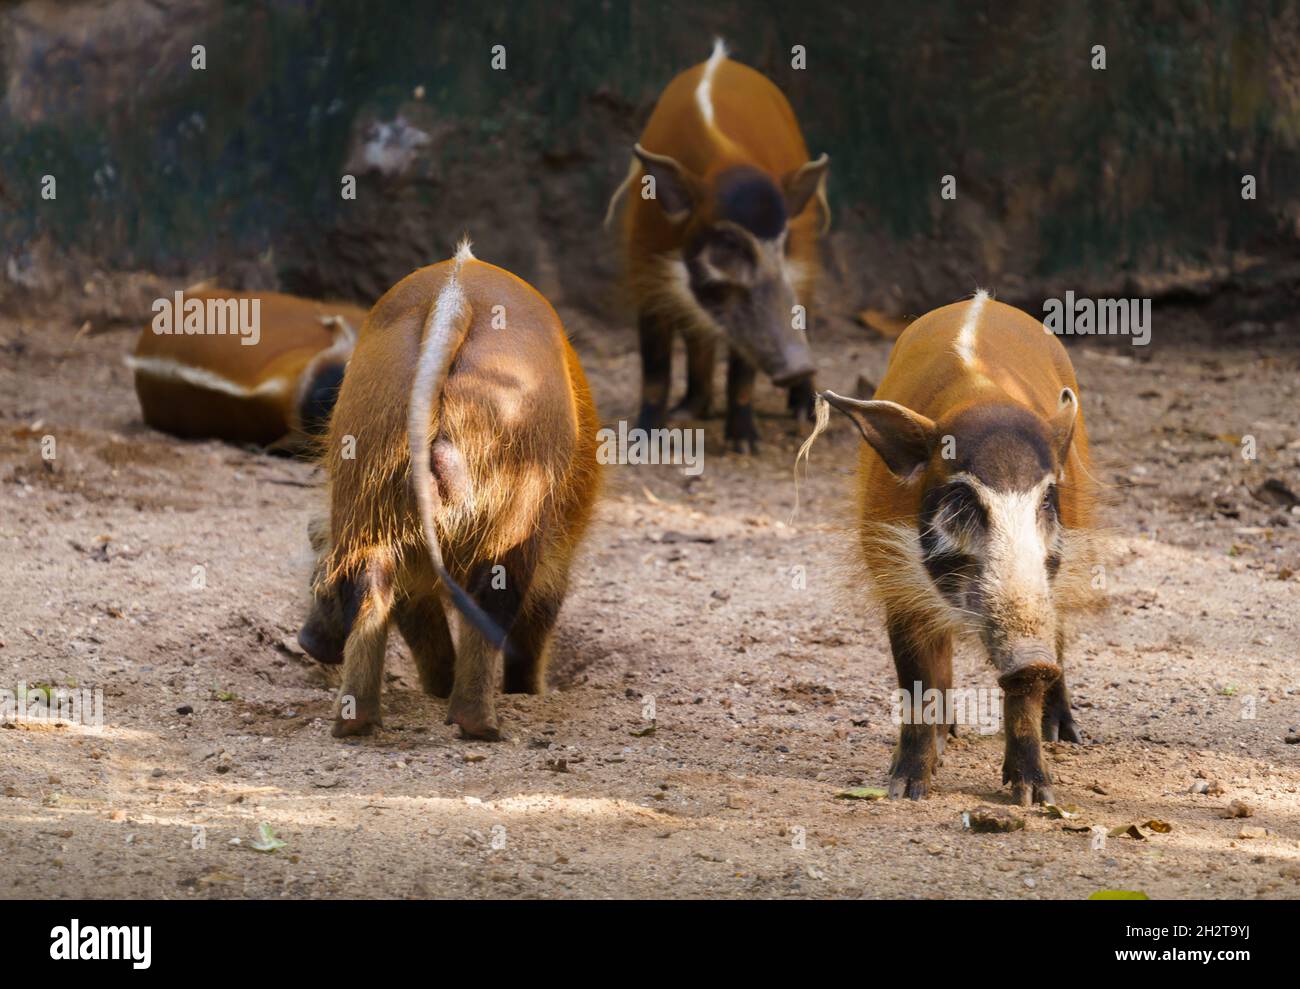 Red River Hog im Zoo Stockfoto